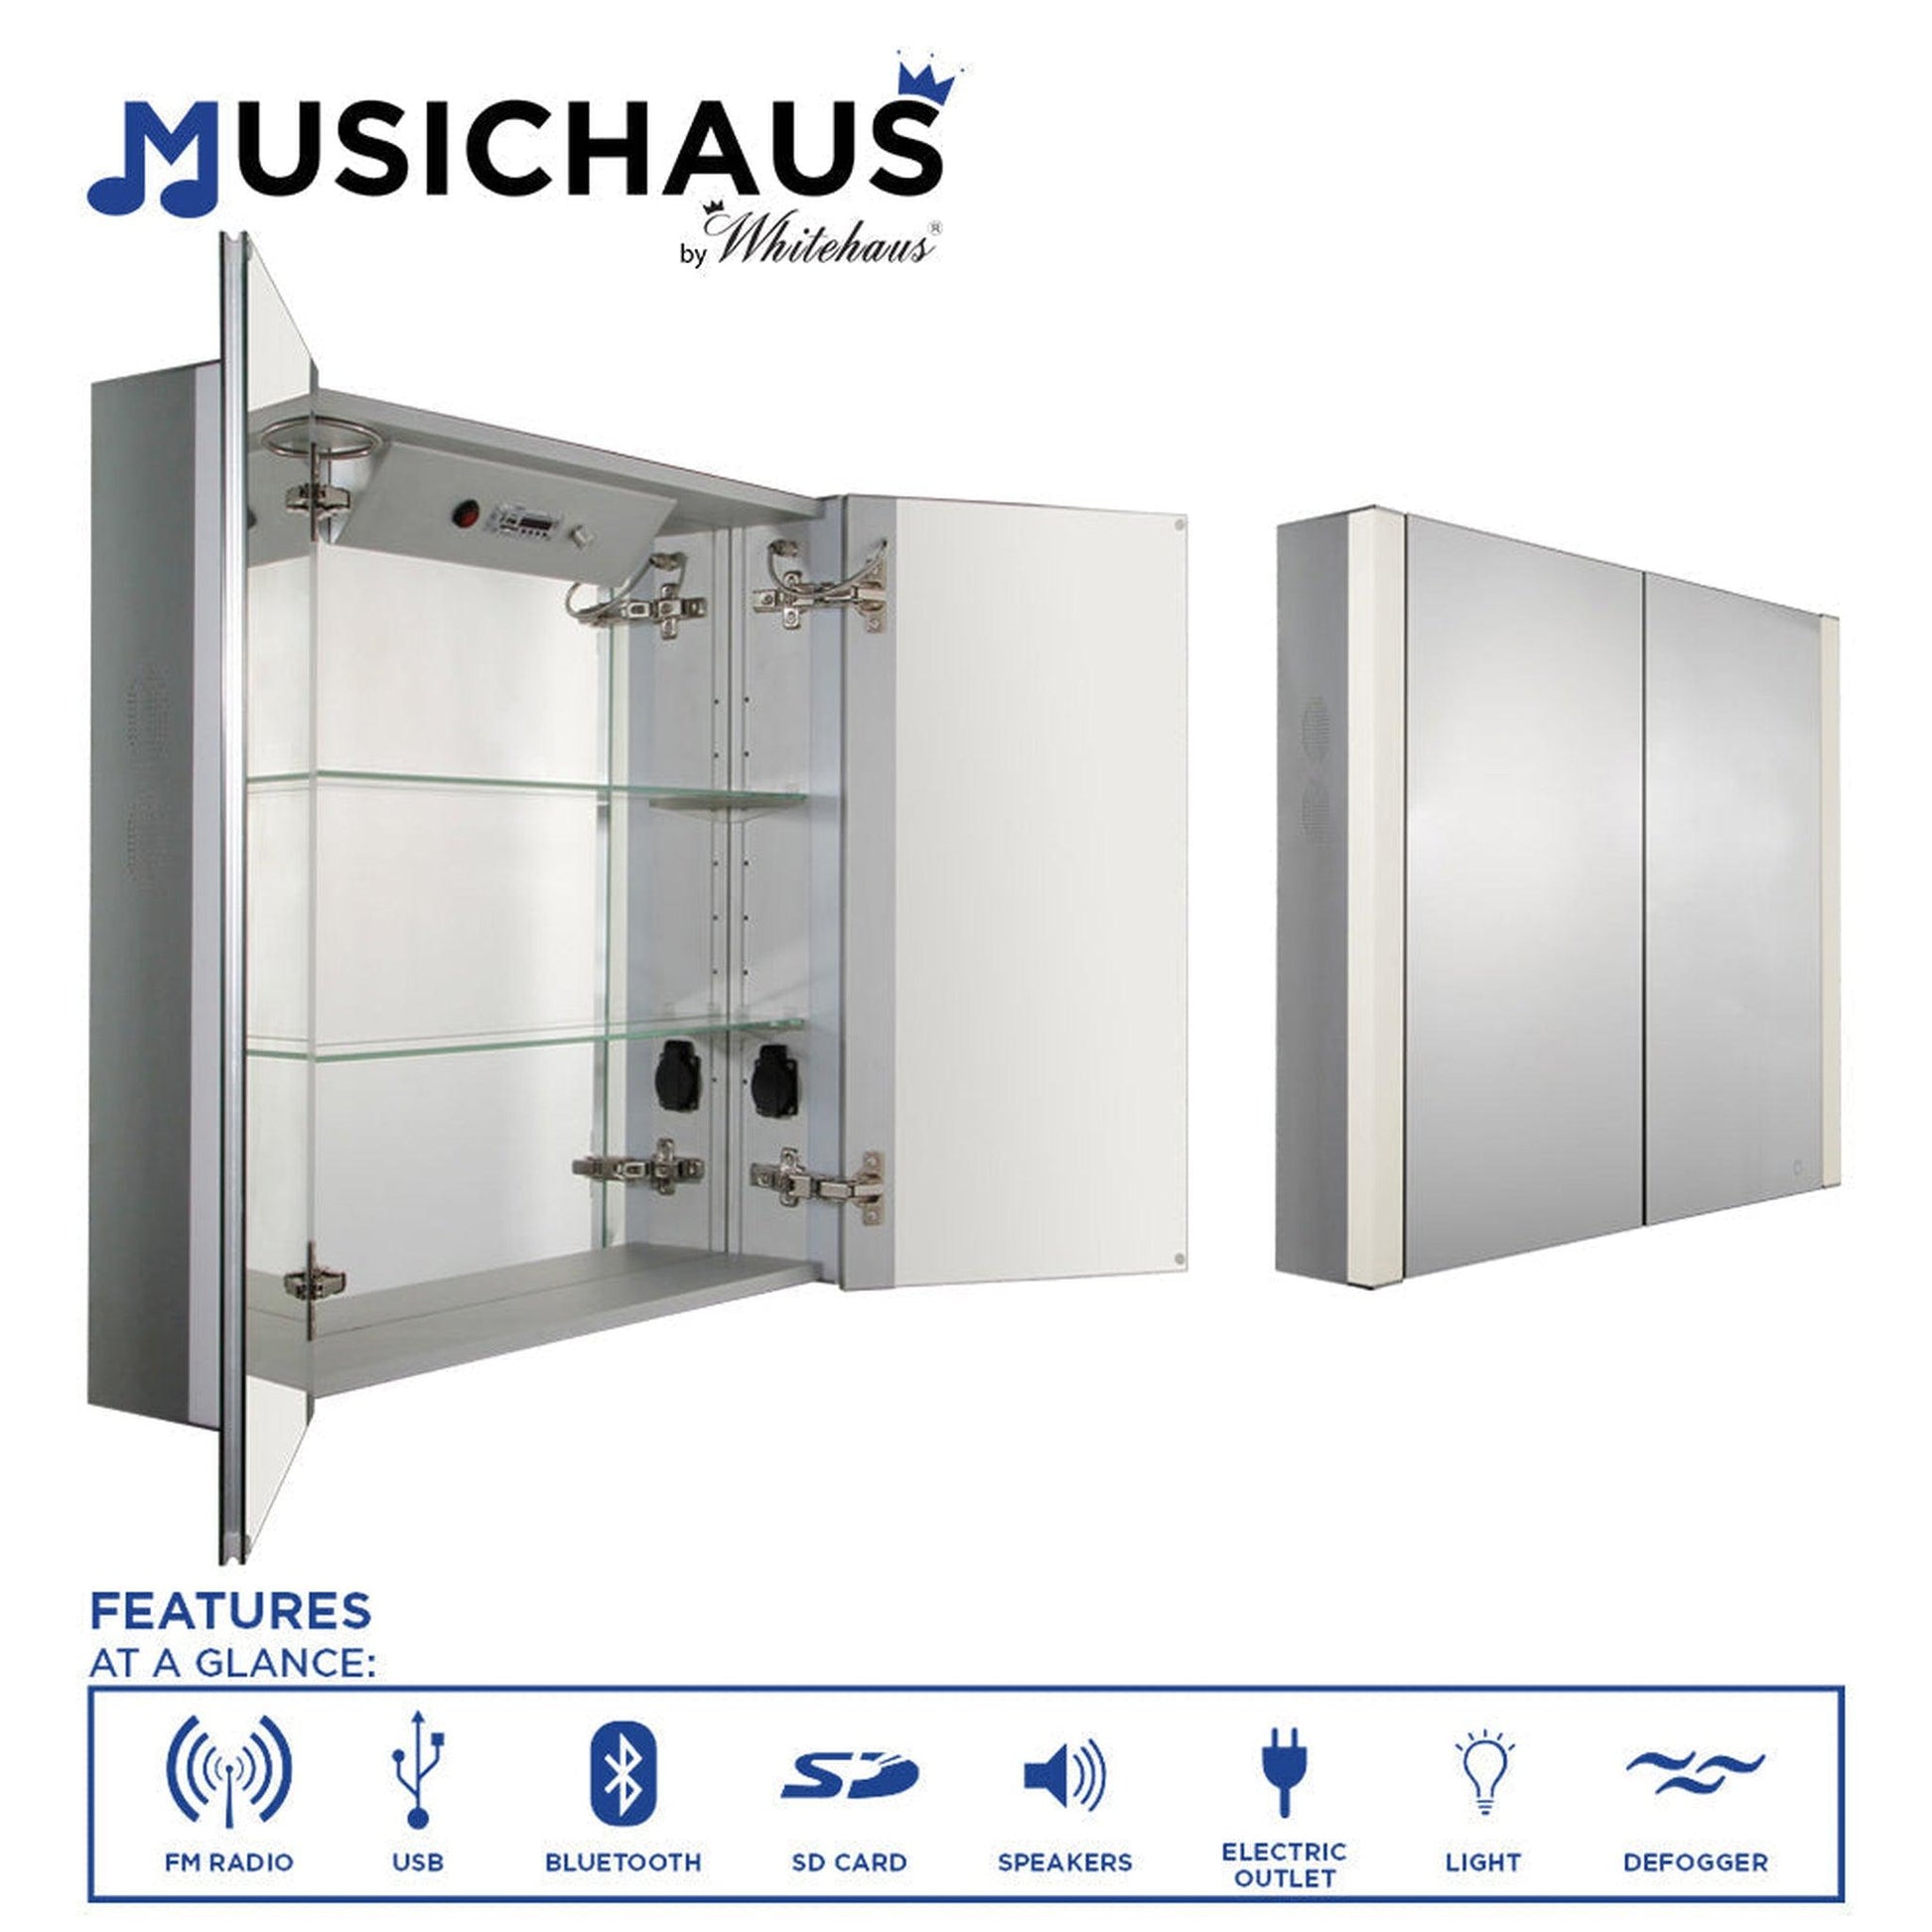 Whitehaus Musichaus WHFEL8069-S Double Mirrored Door Medicine Cabinet With USB, SD Card, Bluetooth, FM Radio, Speakers, Defogger, & Dimmer